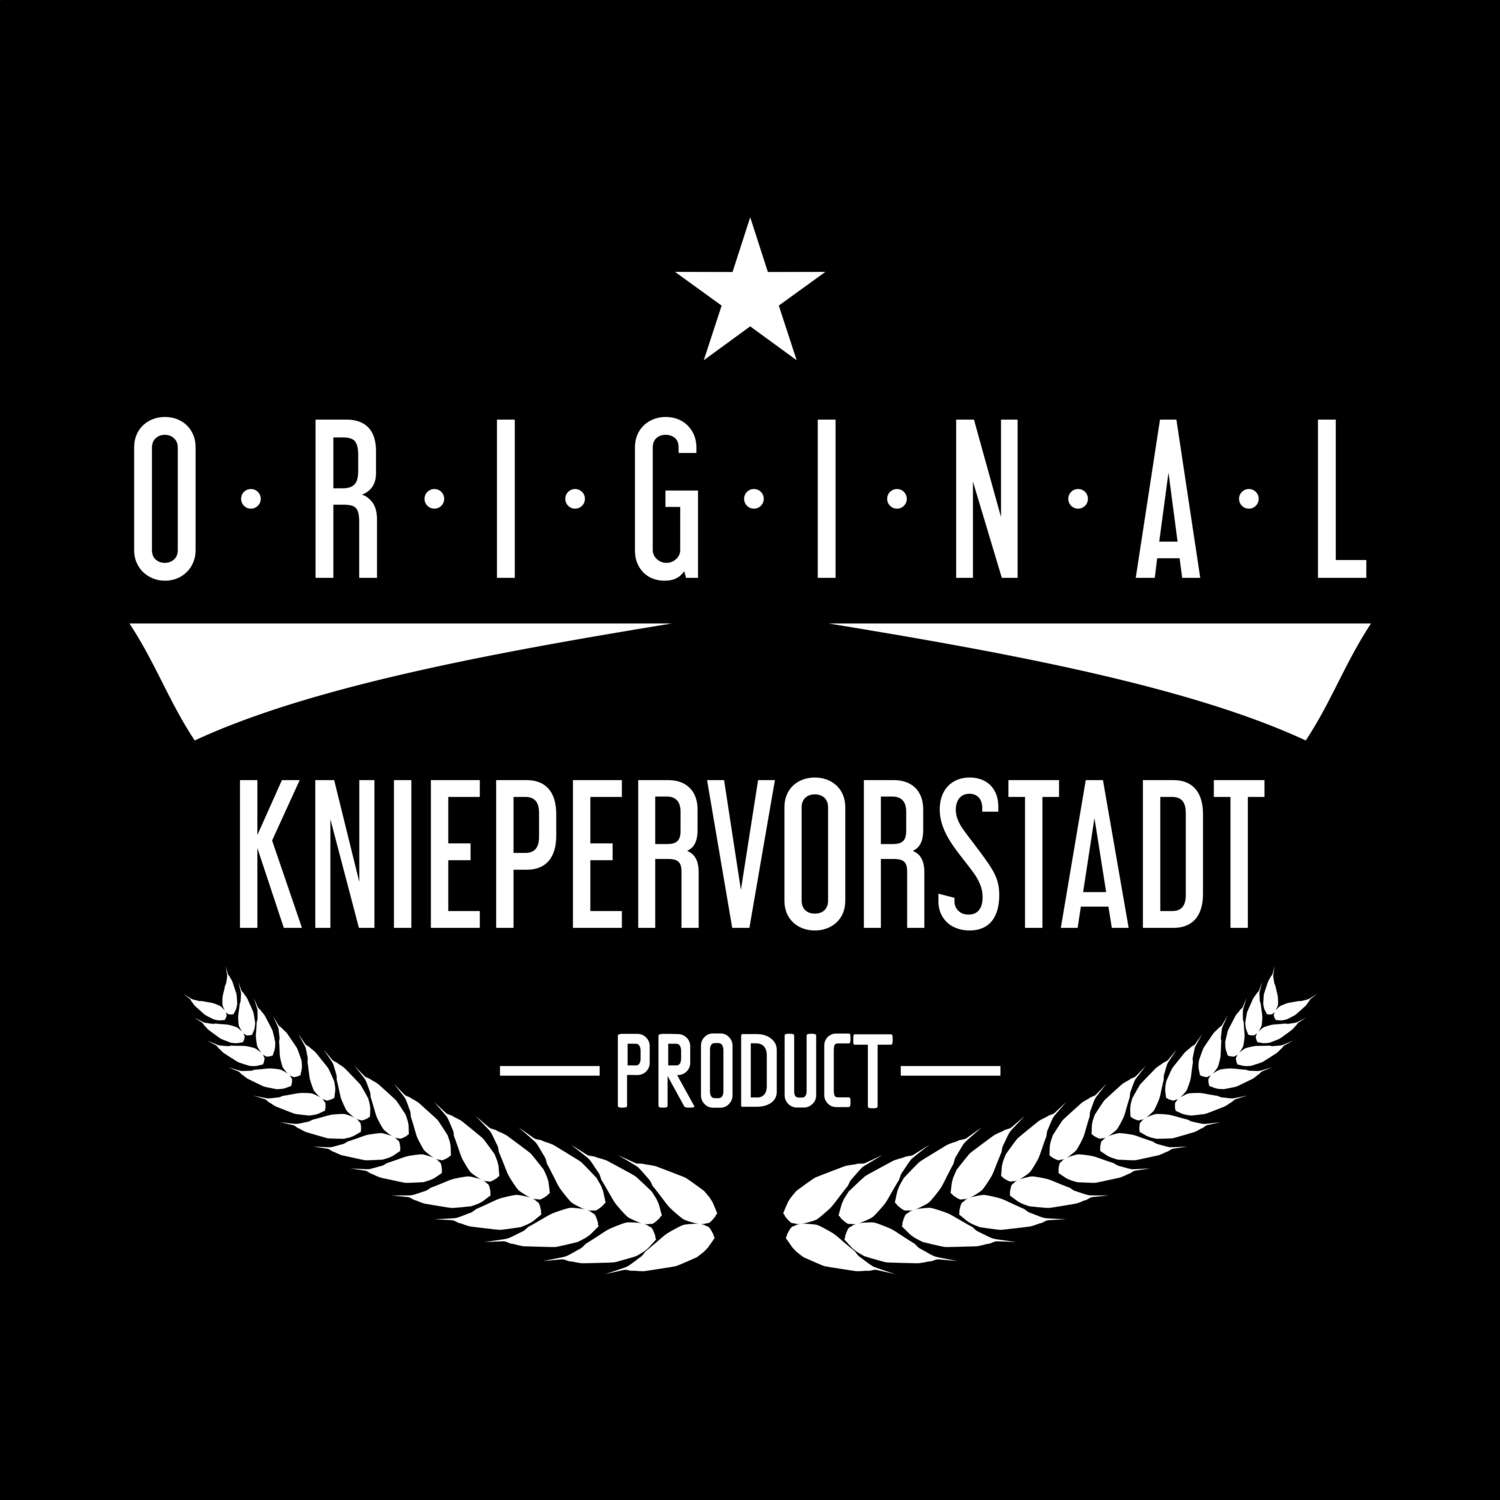 Kniepervorstadt T-Shirt »Original Product«